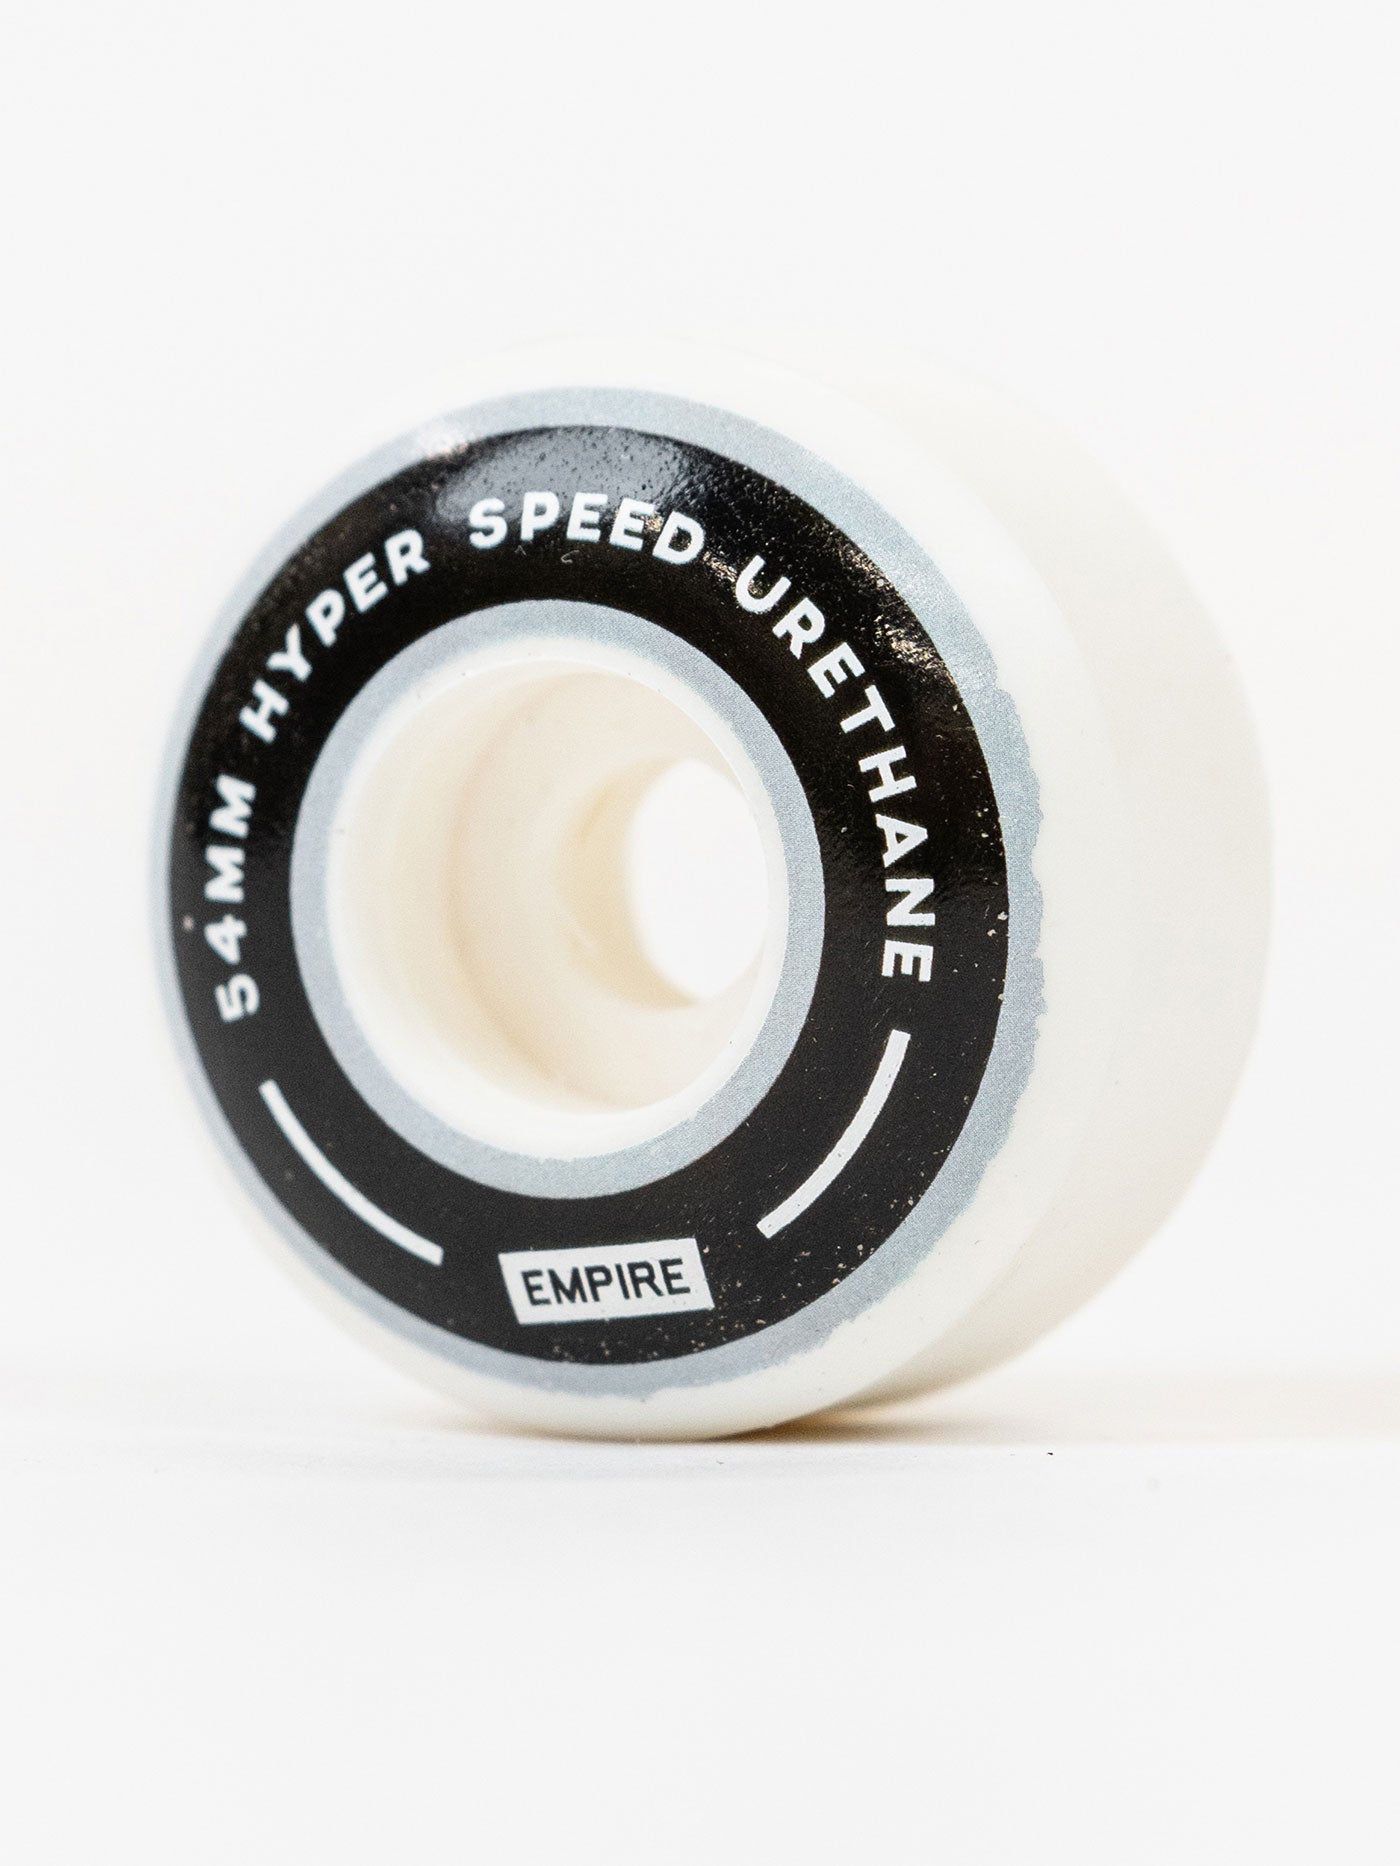 Empire Acrylic Silver/Black Skateboard Wheels